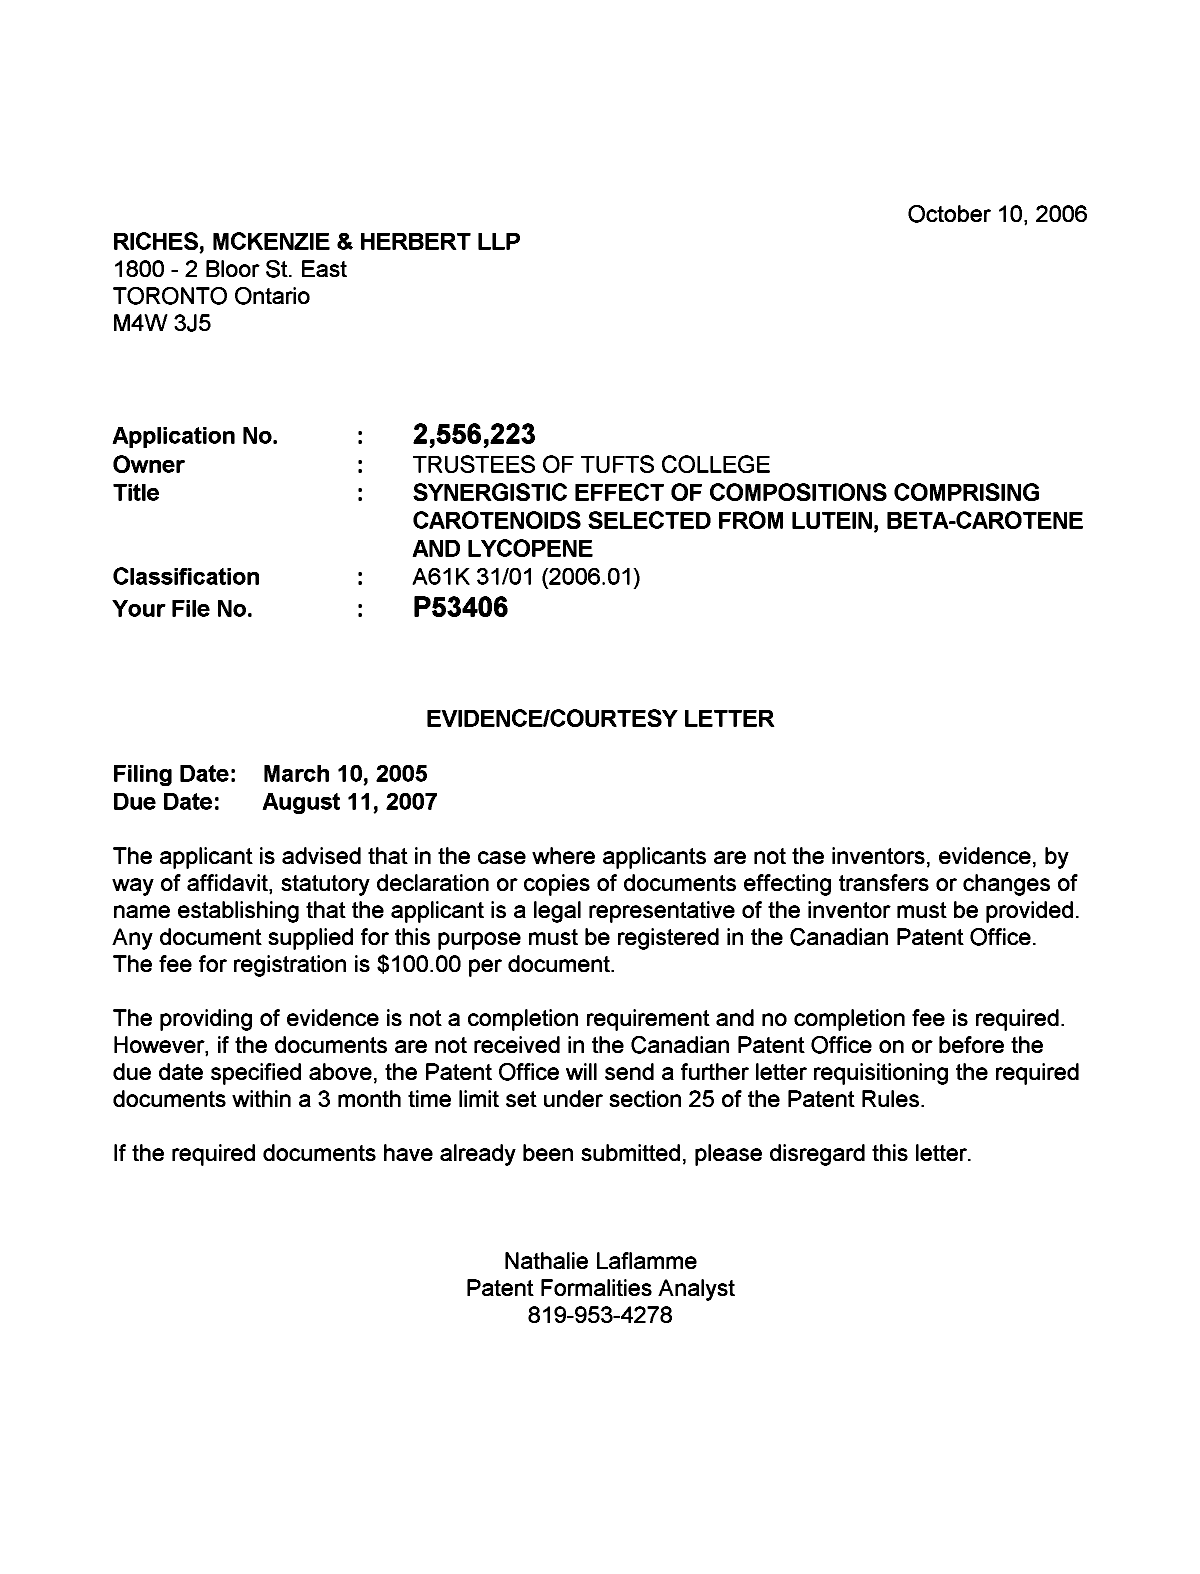 Canadian Patent Document 2556223. Correspondence 20061005. Image 1 of 1